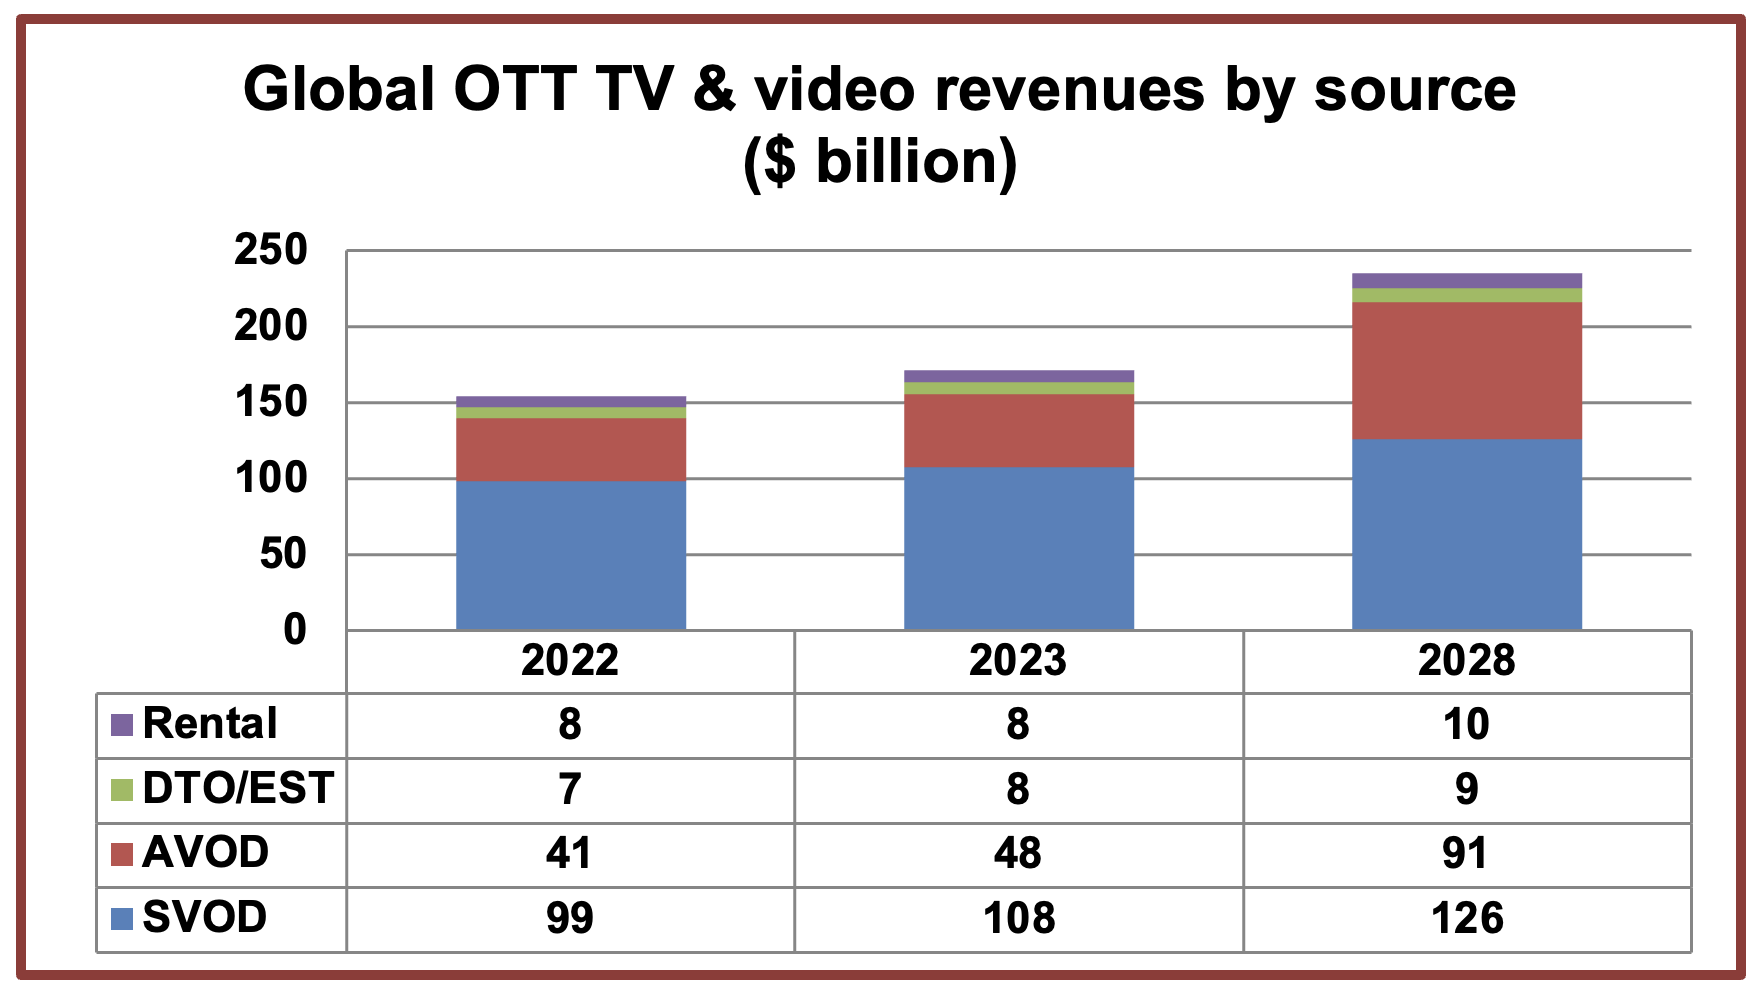 AVOD growth will double SVOD as global OTT revenues reach $235bn